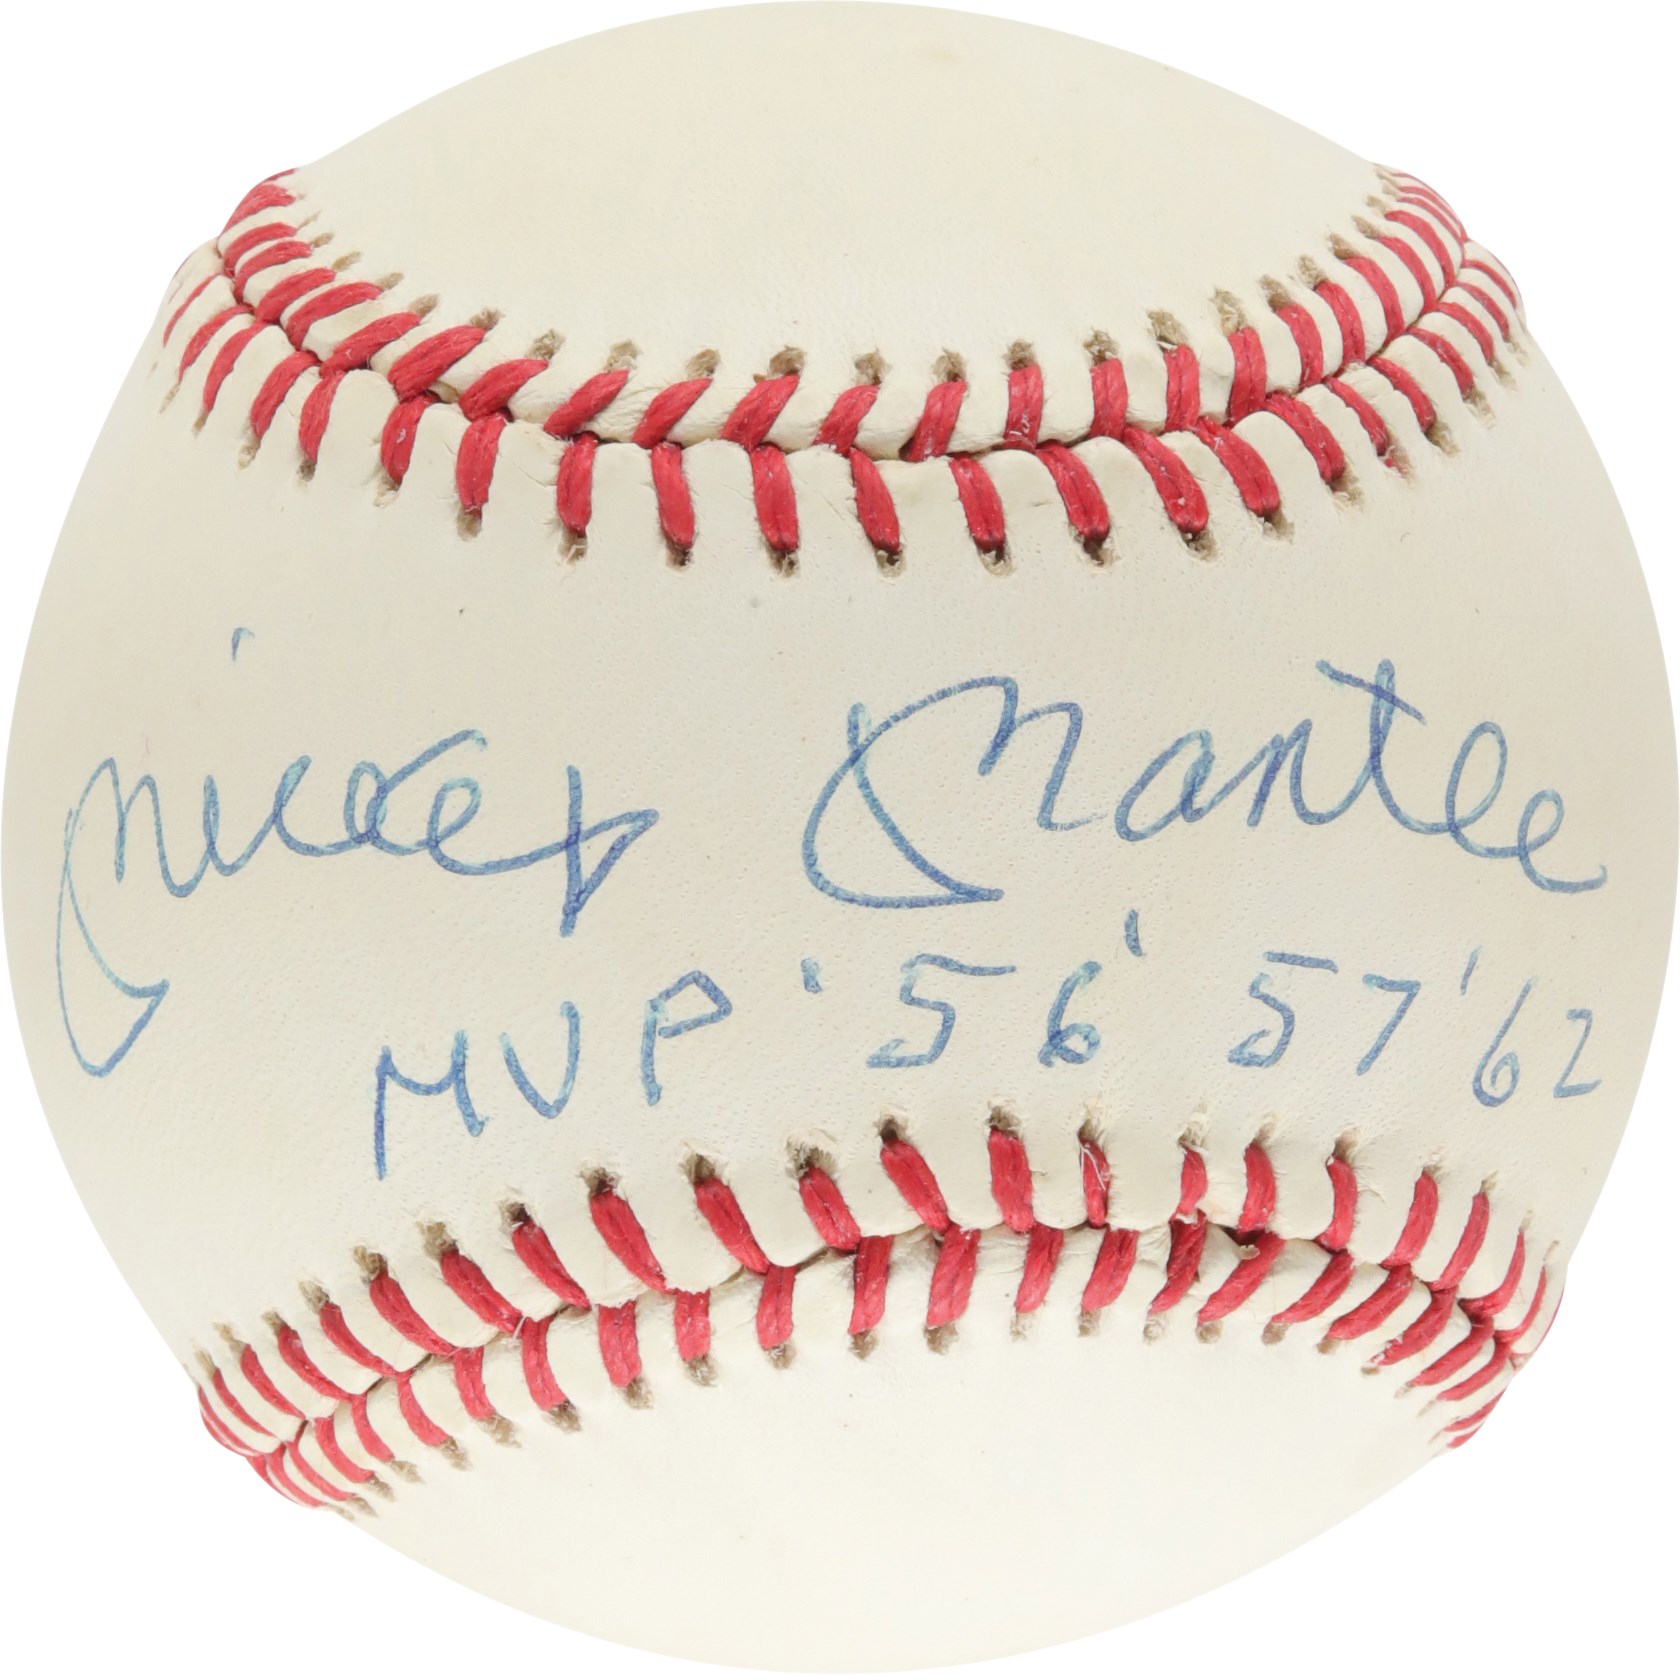 - Mickey Mantle "MVP '56 '57 '62" Single-Signed Baseball (PSA)